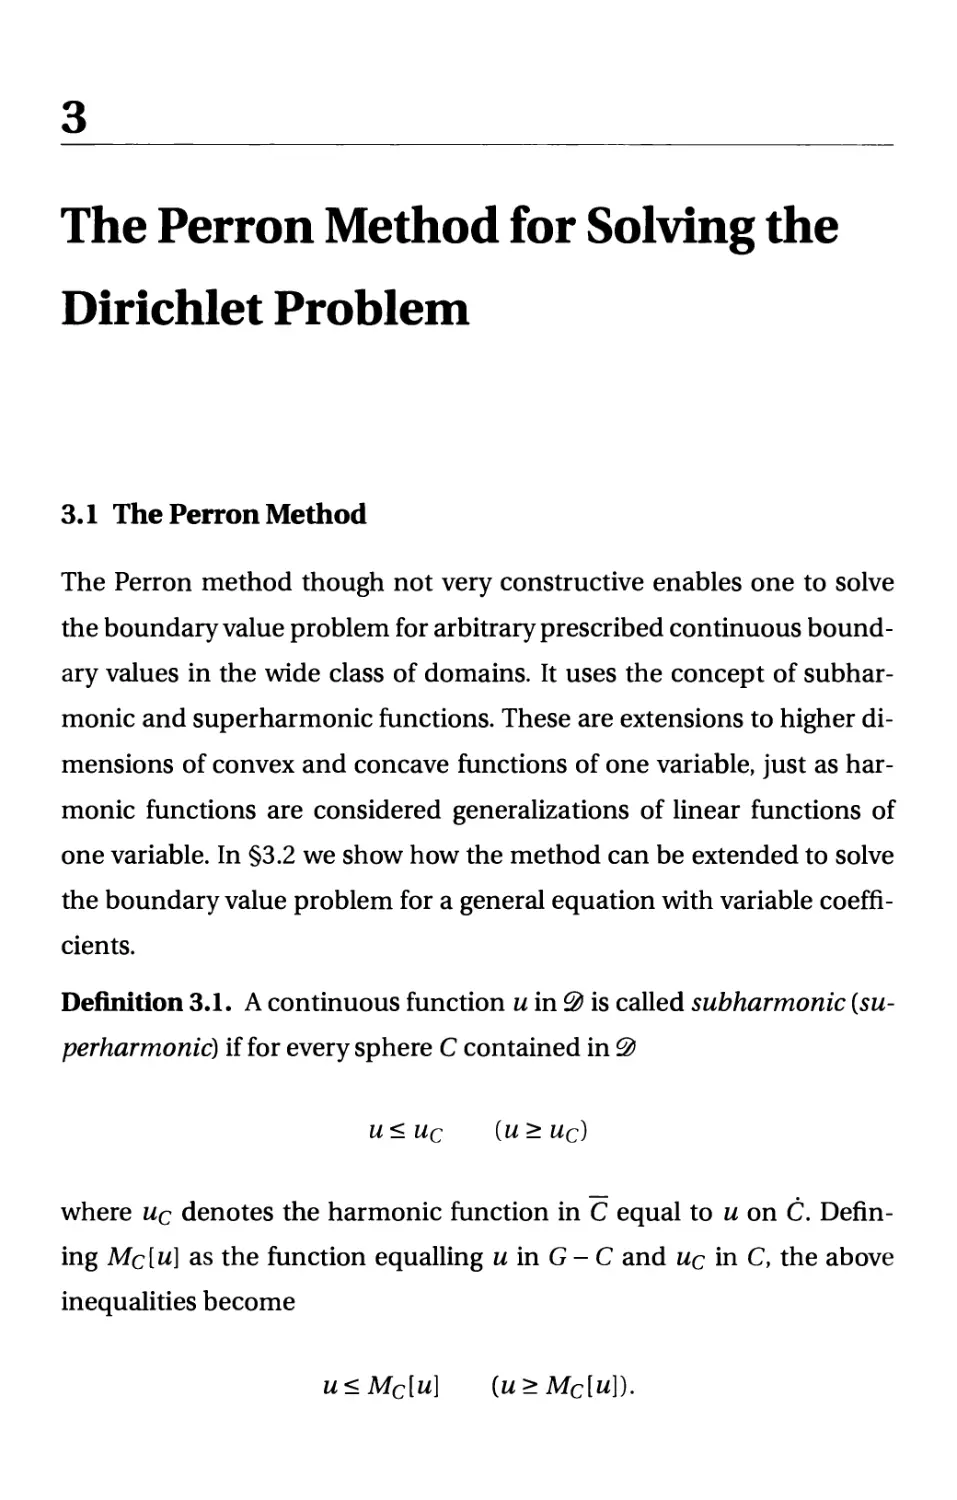 3. The Perron Method for Solving the Dirichlet Problem
3.1 The Perron Method